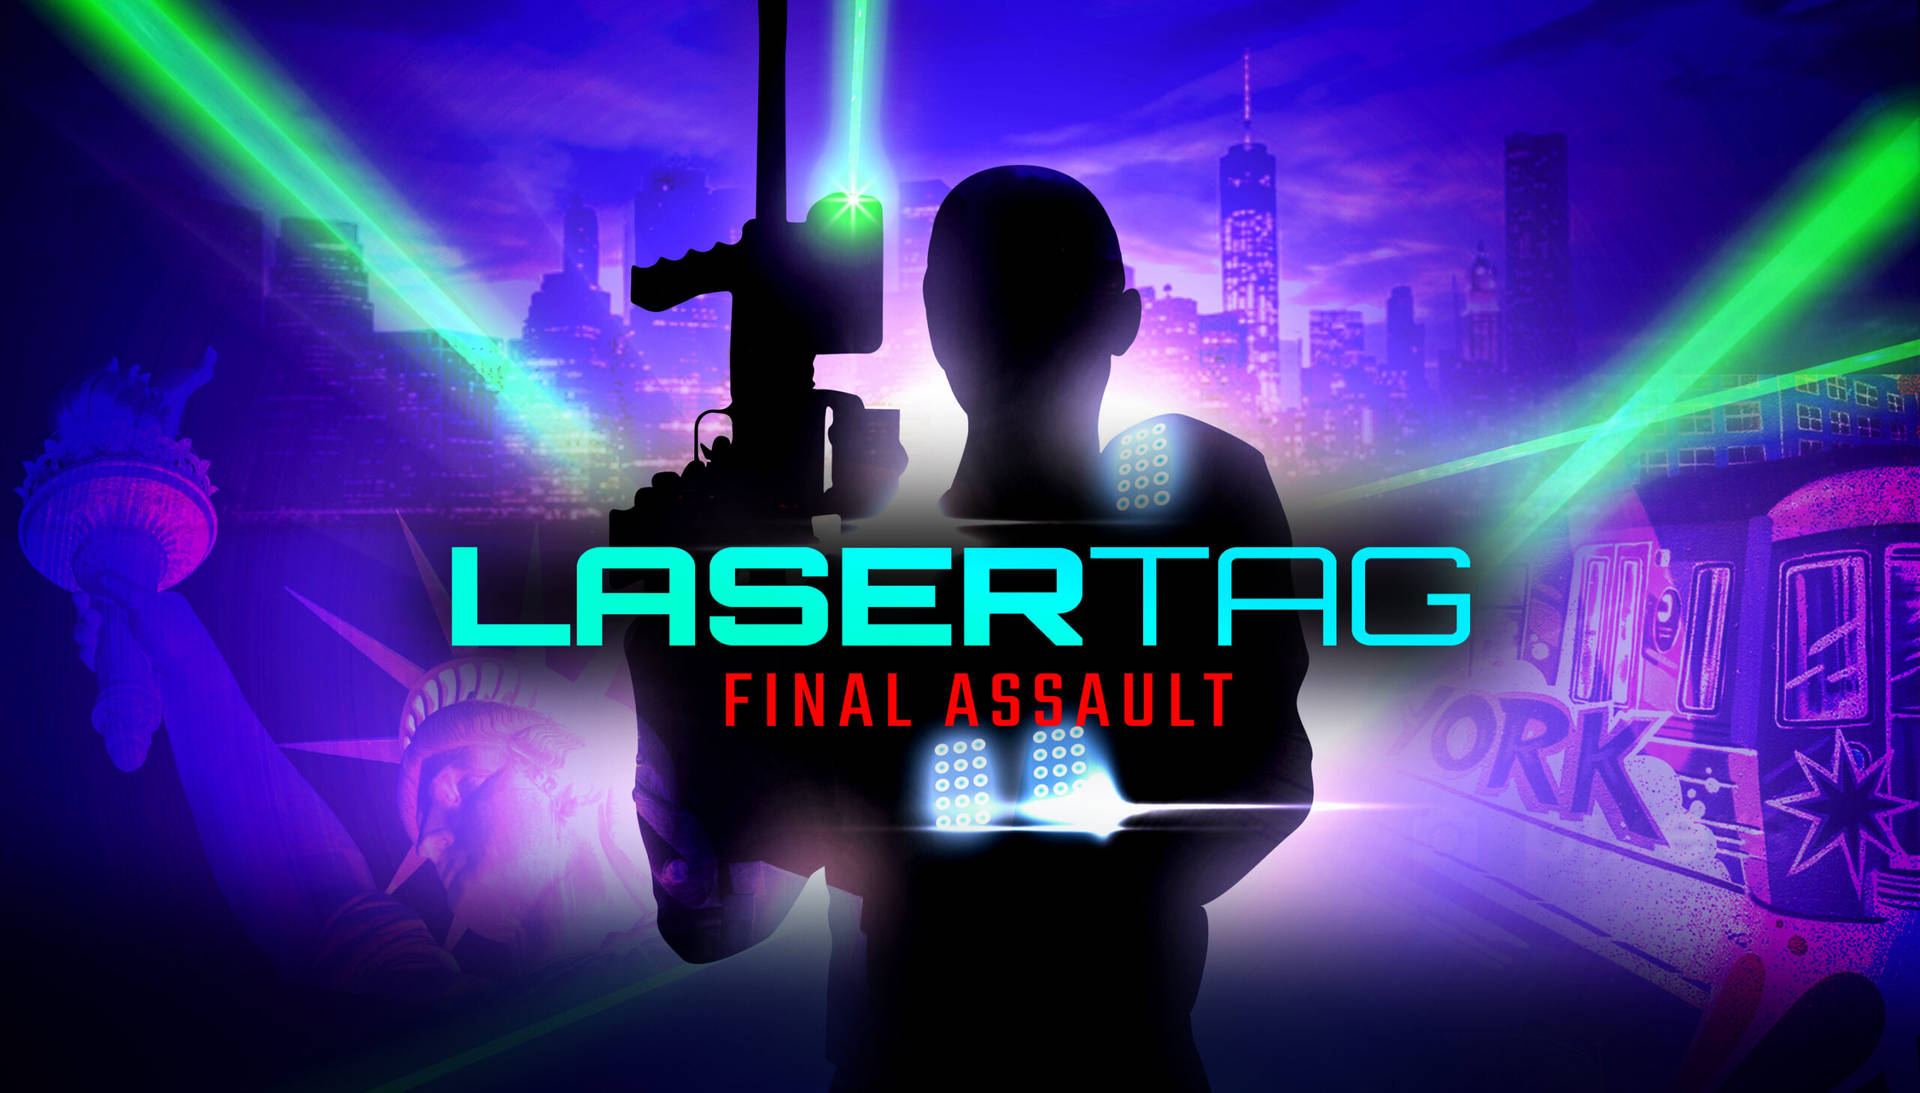 Laser Tag Final Assault Wallpaper